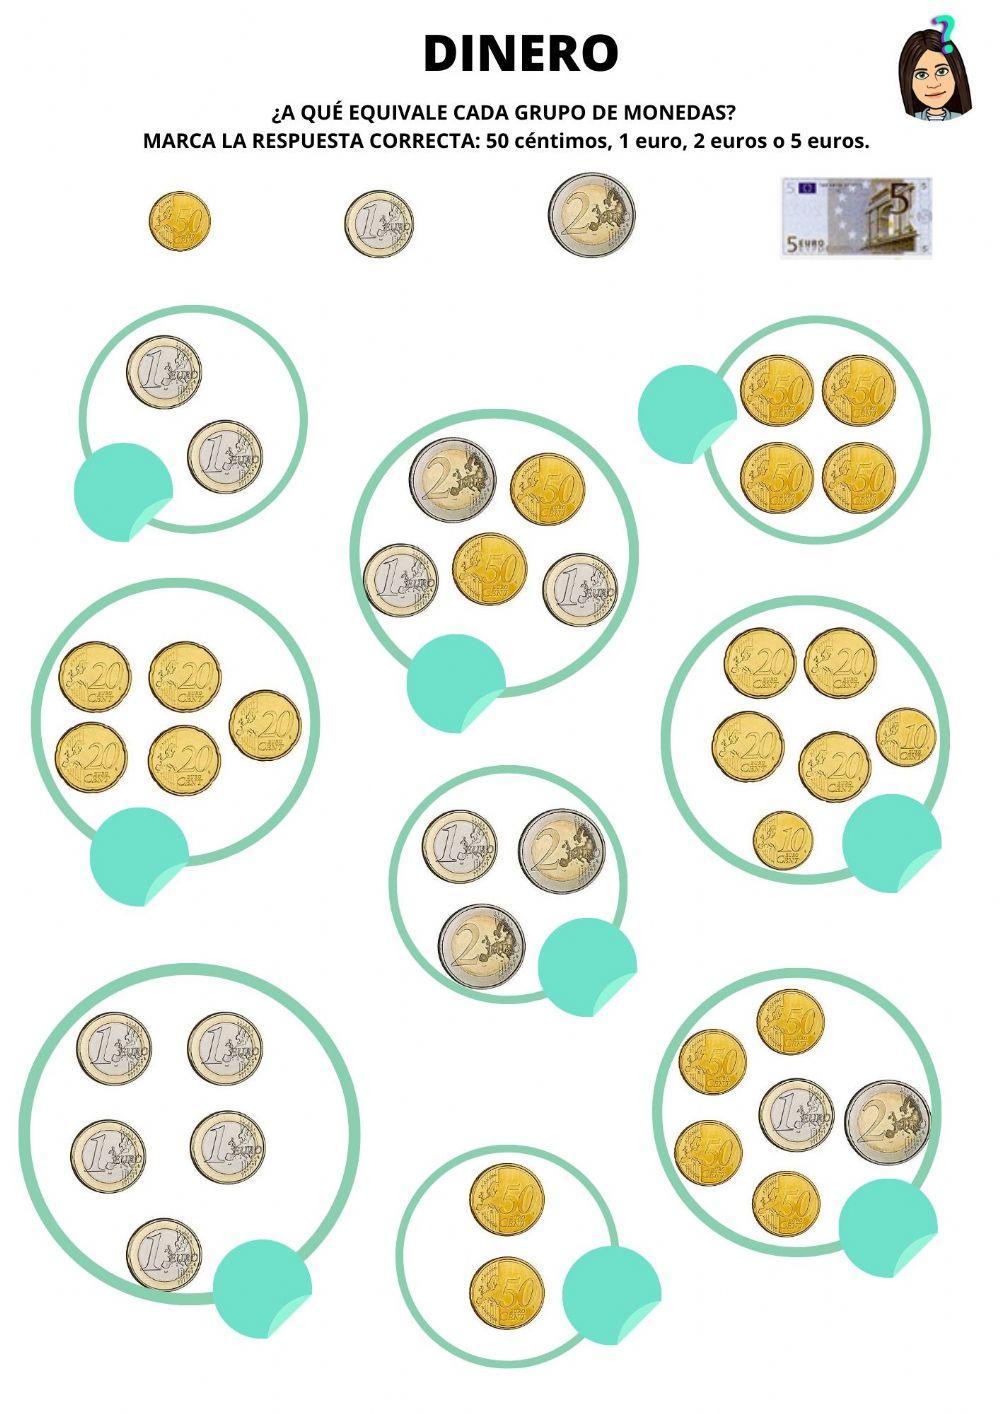 ¿A cuánto equivale cada grupo de monedas?